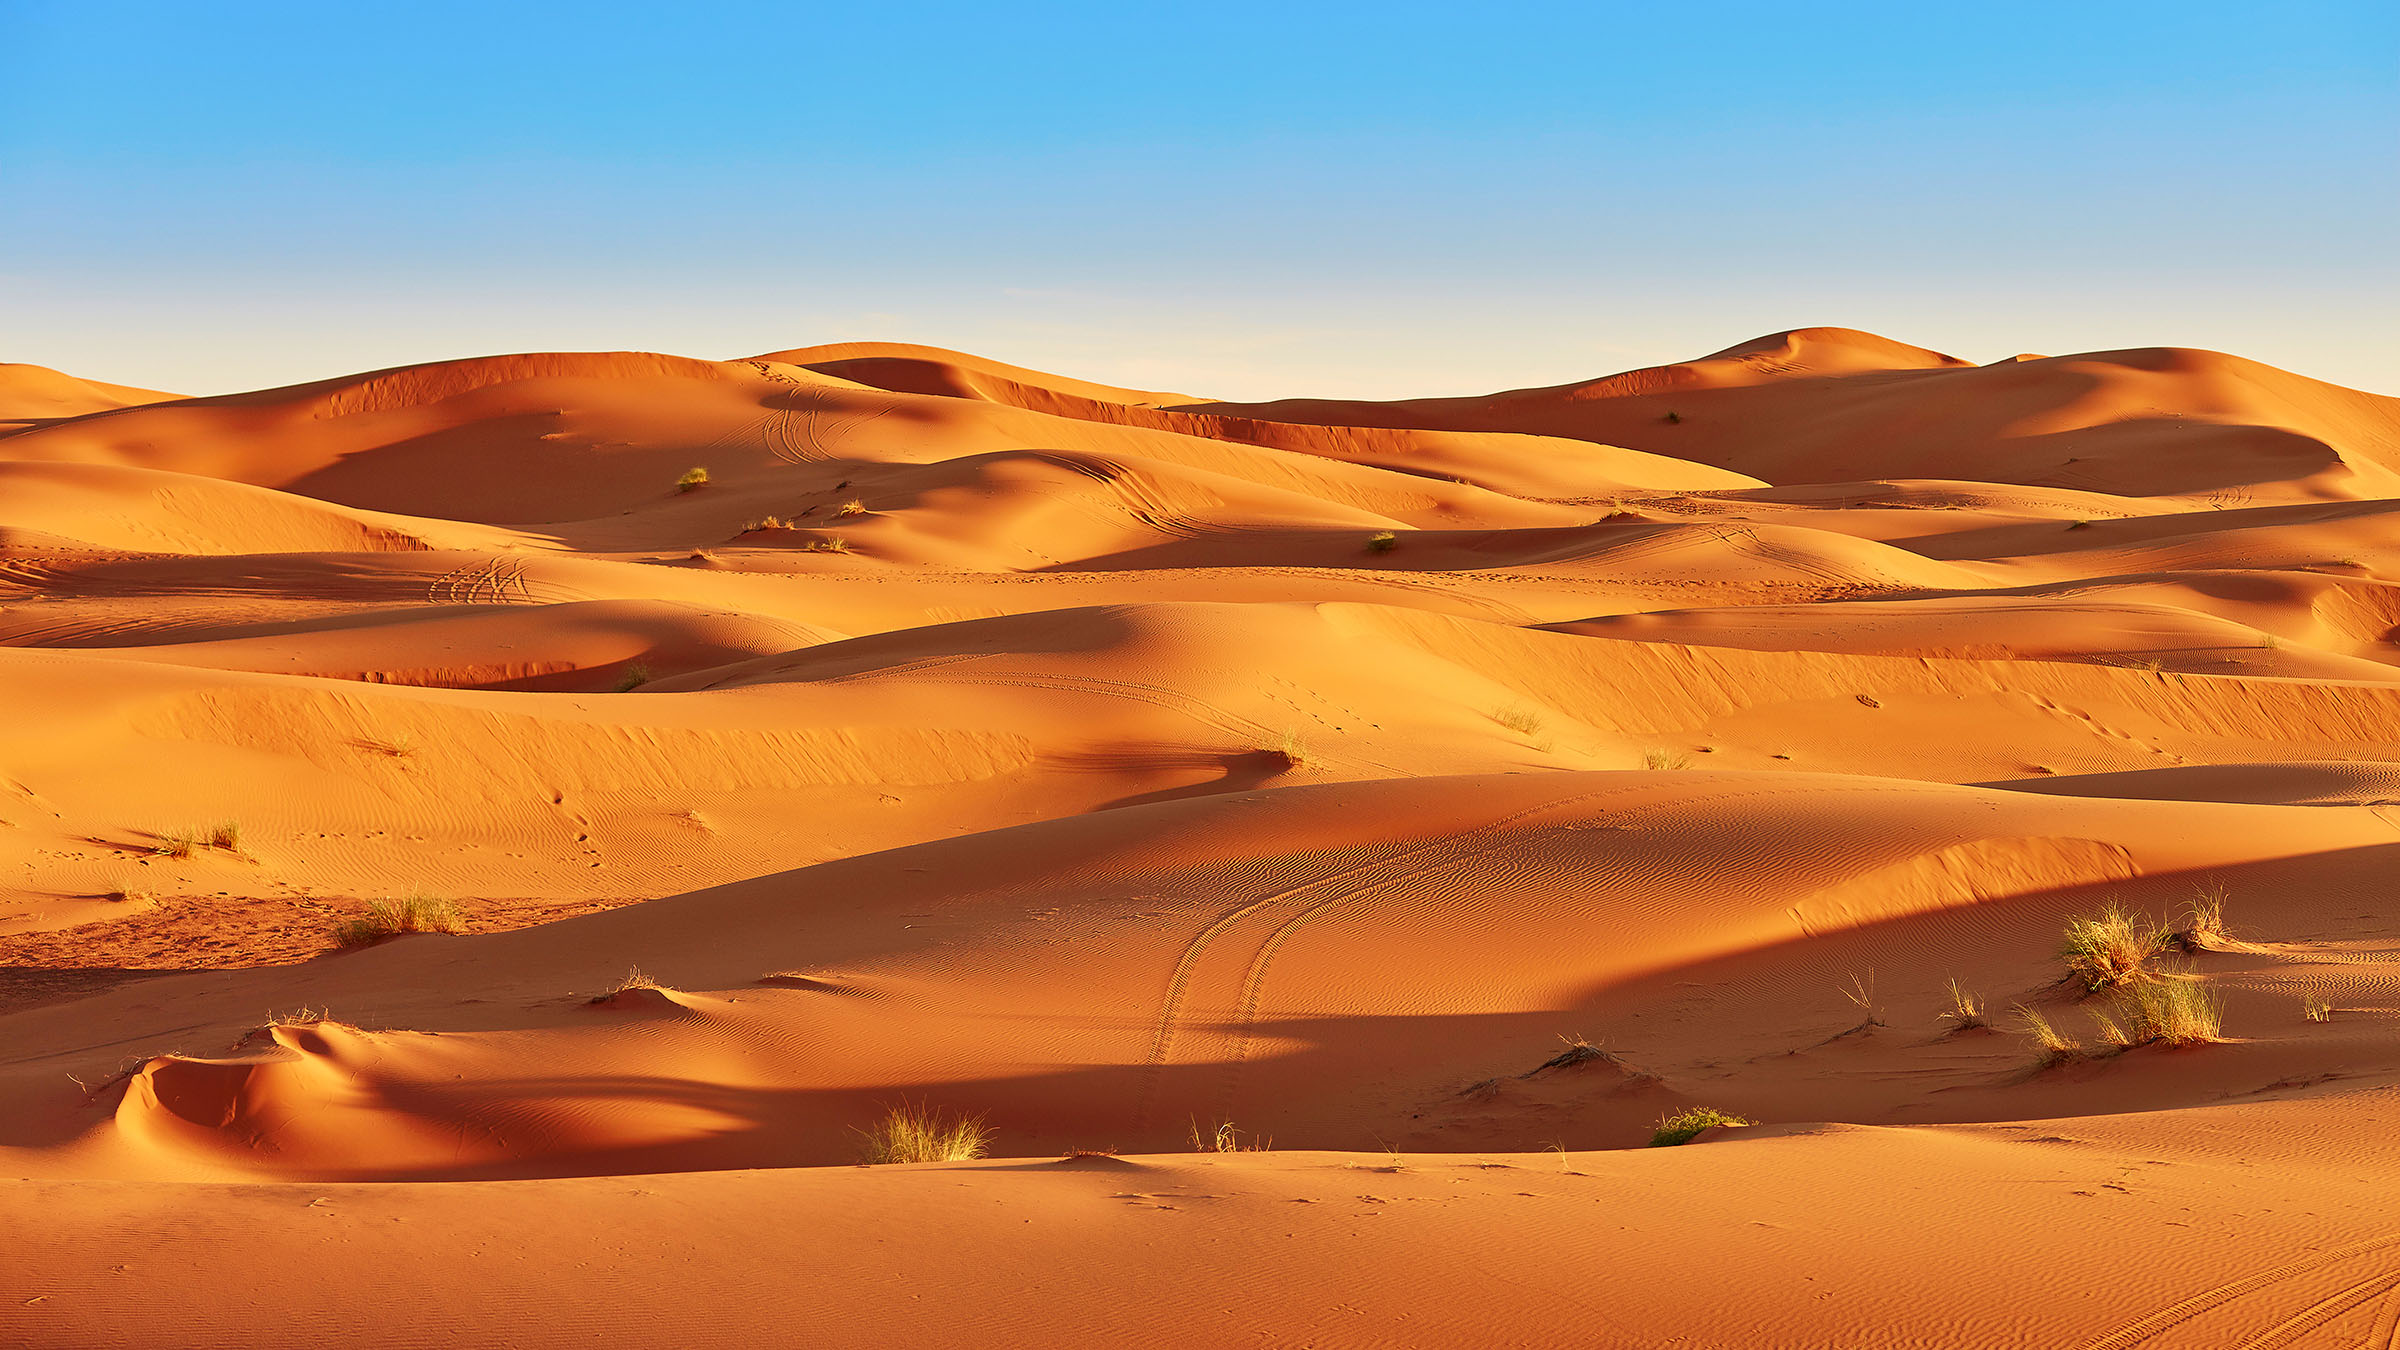 General 2400x1350 nature landscape desert sand Sahara clear sky Africa dunes plants tire tracks sunlight